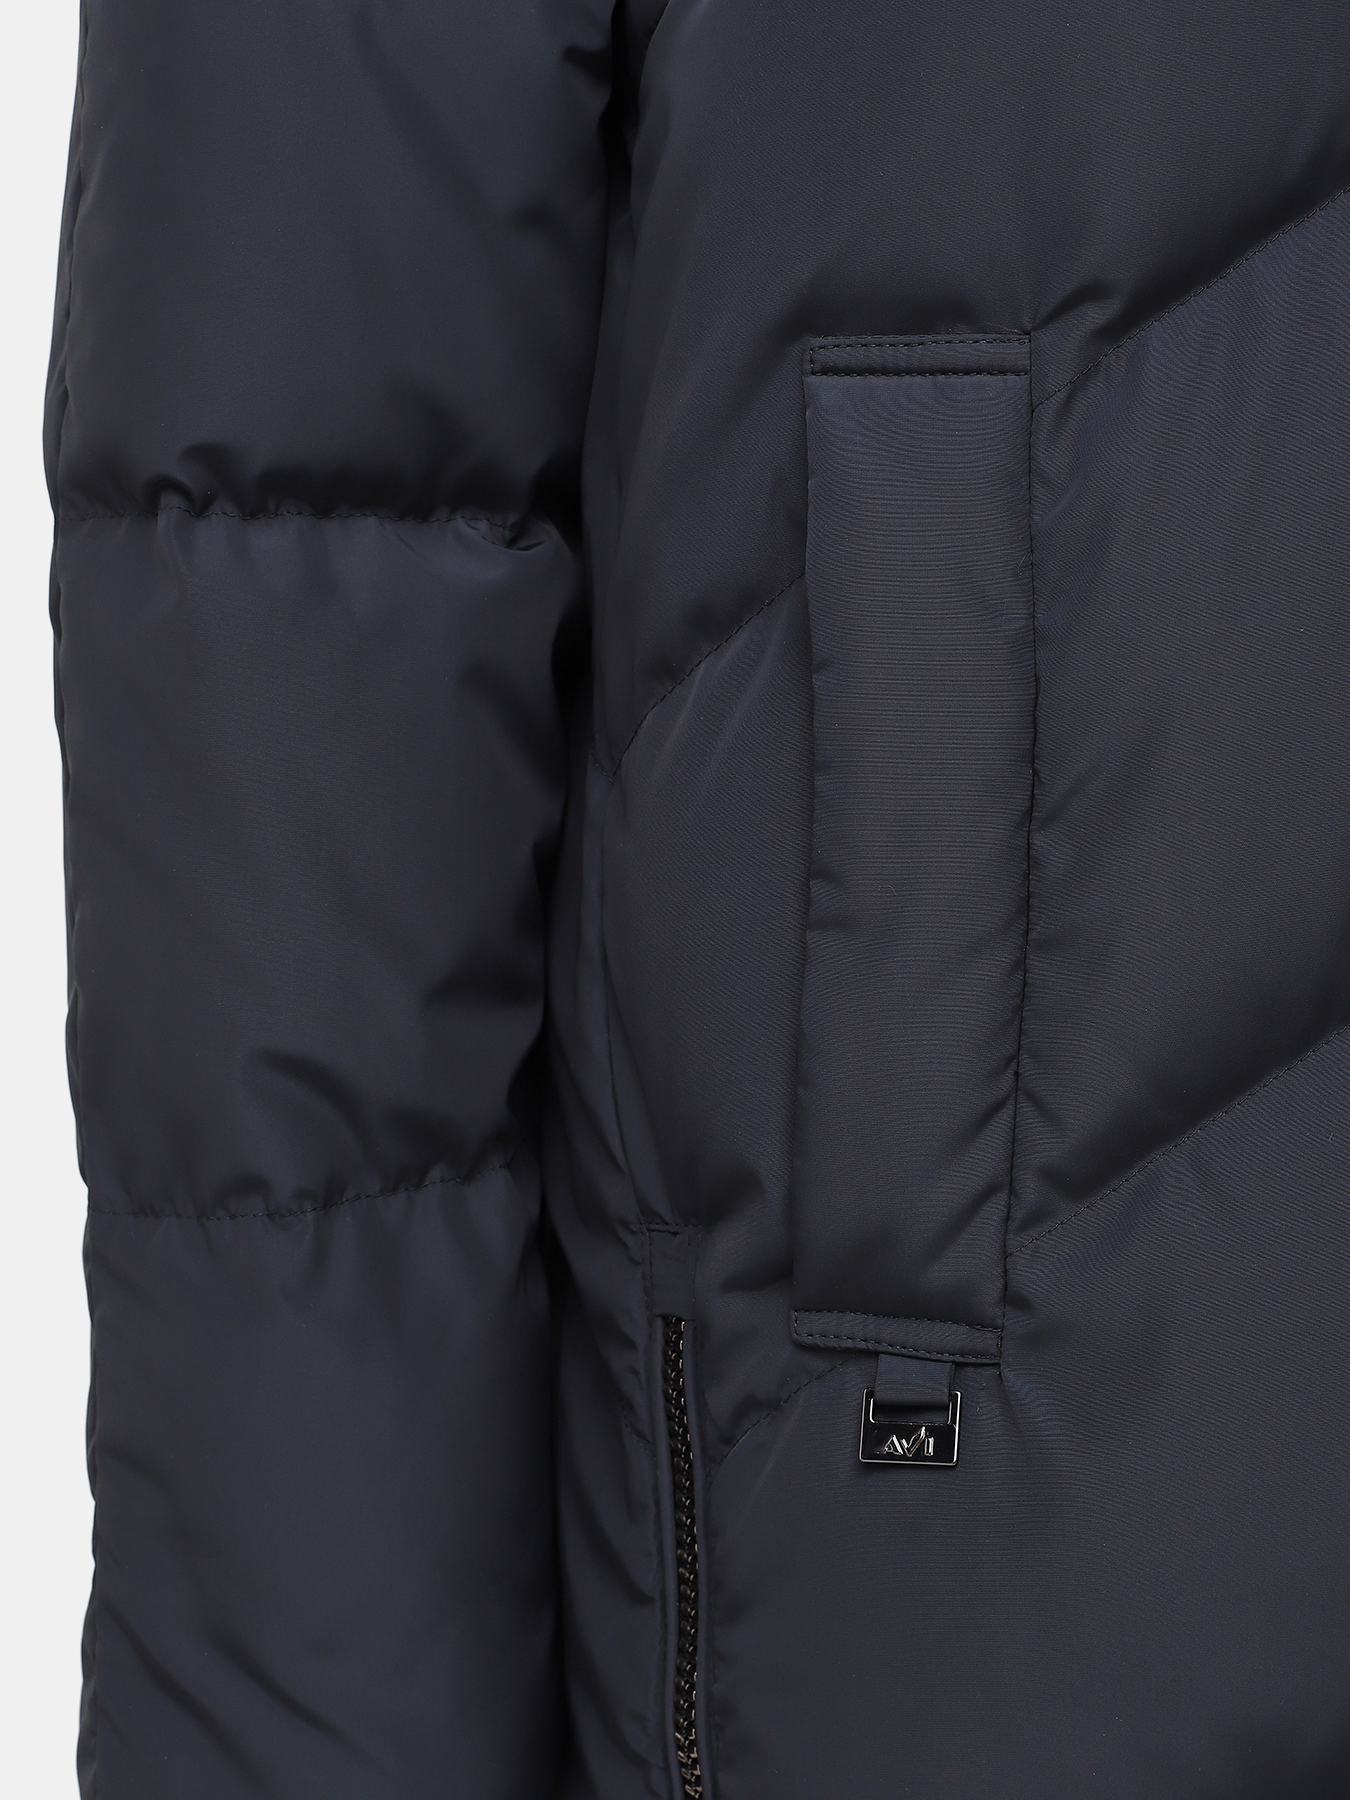 Пальто зимнее AVI 433610-021, цвет темно-синий, размер 46 - фото 2